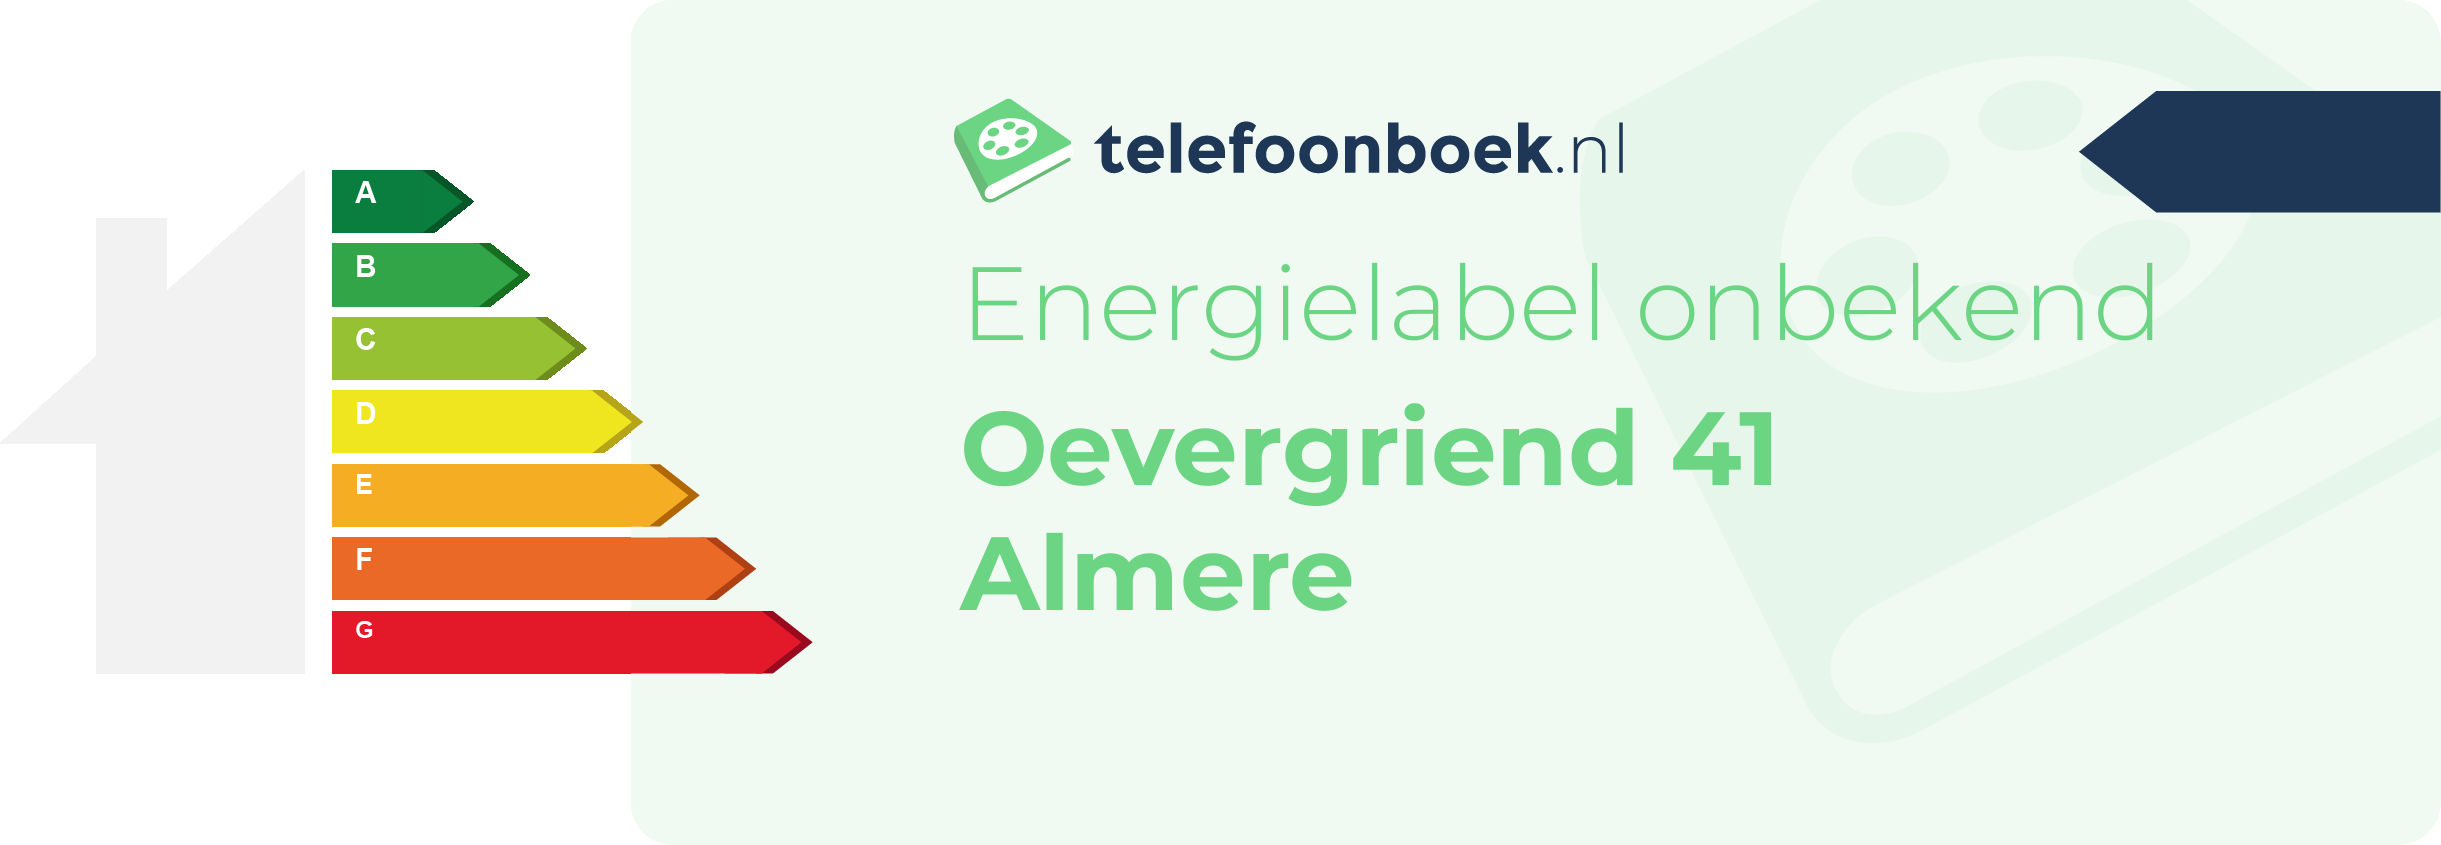 Energielabel Oevergriend 41 Almere